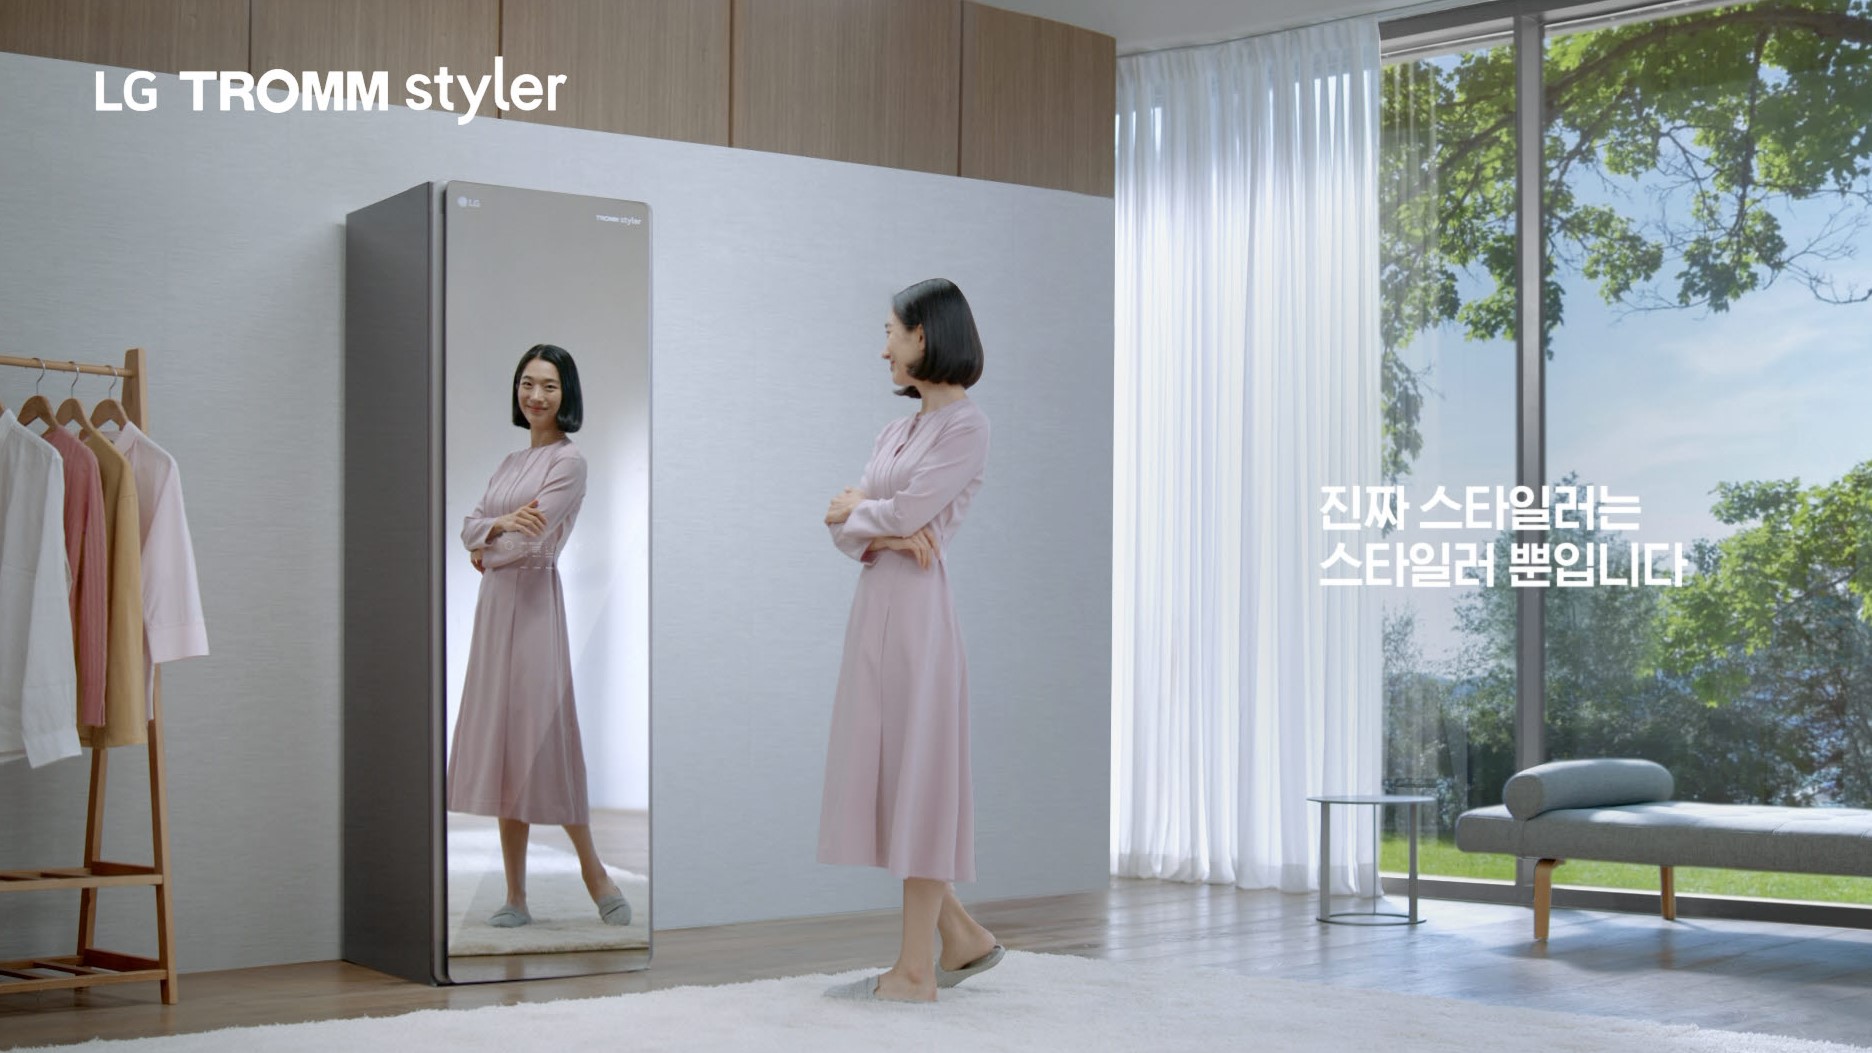 LG전자, 트롬 스타일러 차별적 편리함 강조한 새 TV광고 시작